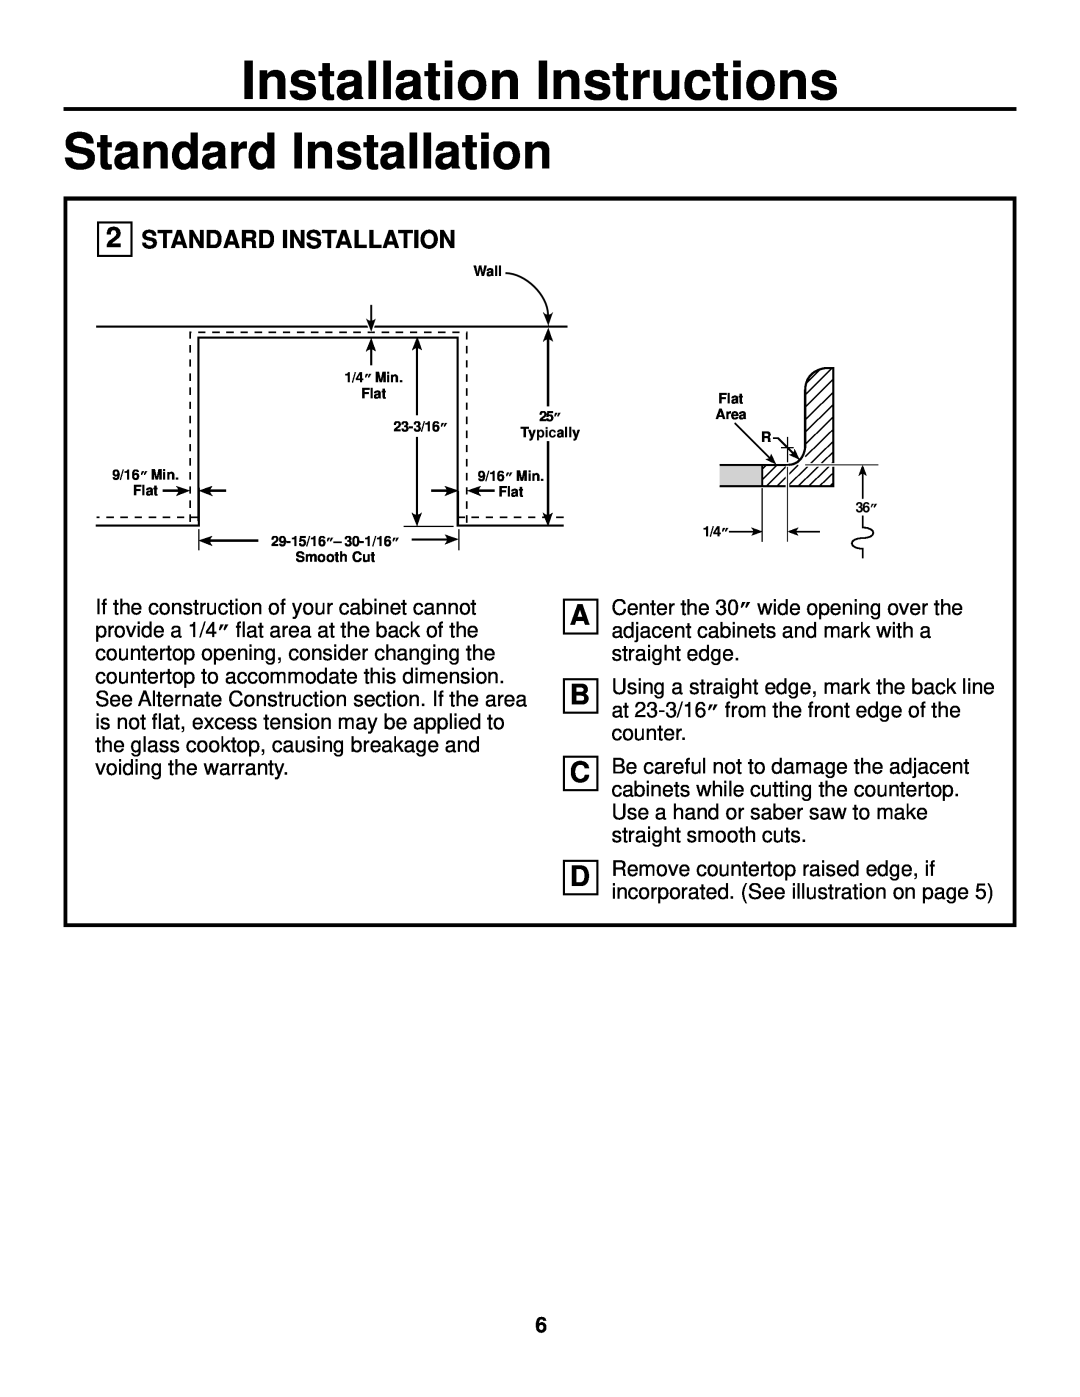 GE JS905 installation instructions Standard Installation, A B C D, Installation Instructions 